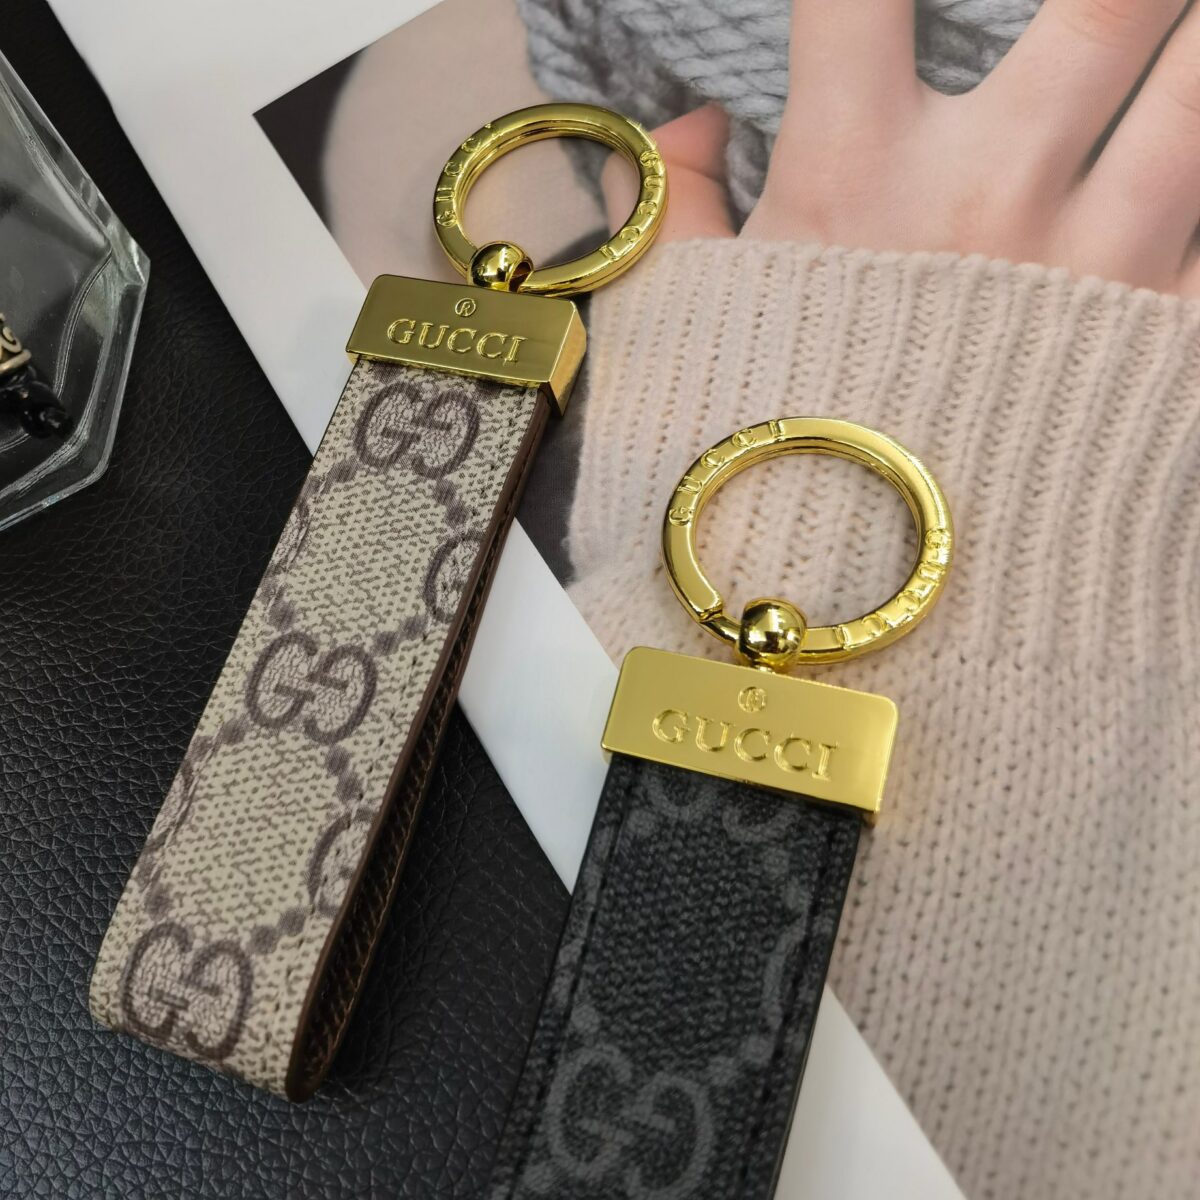 Gucci key chains: A fashionable ensemble of high-quality, designer key accessories.